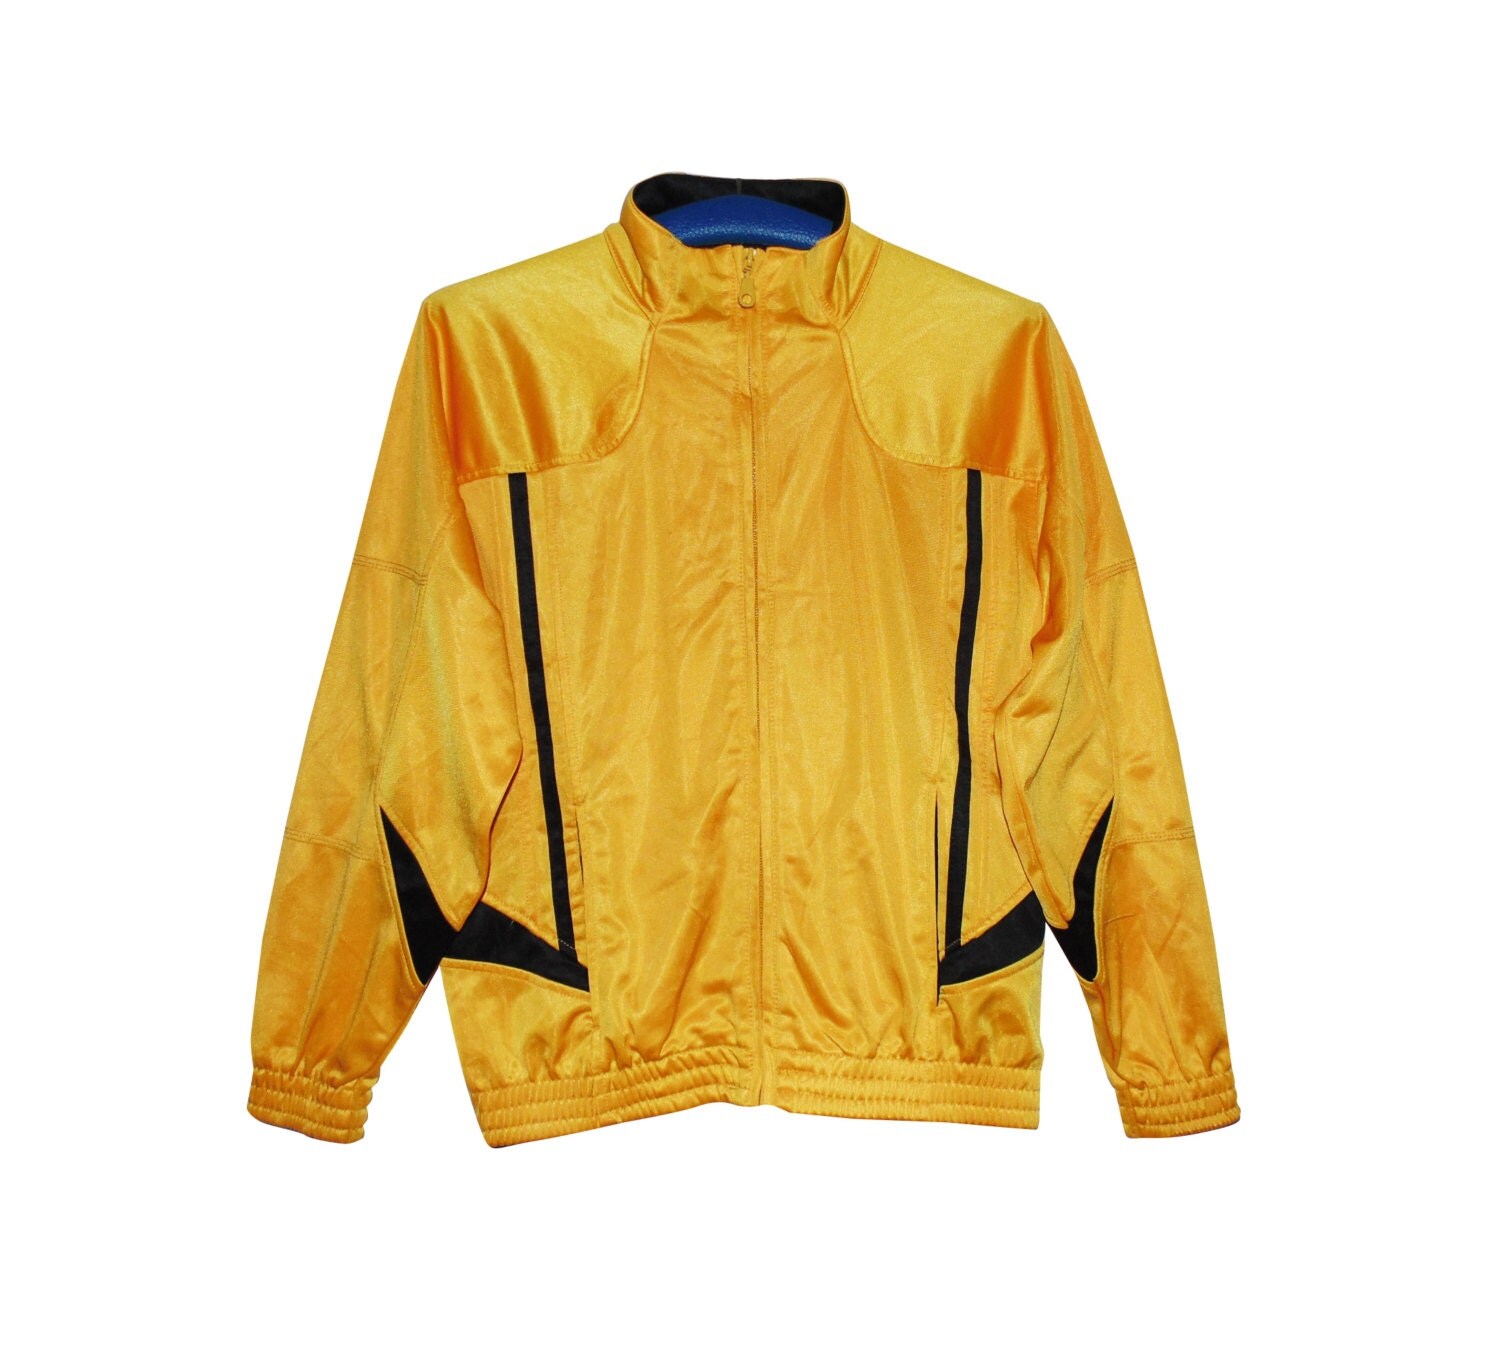 XS yellow jacket retro women bomber jacket yellow happy yellow